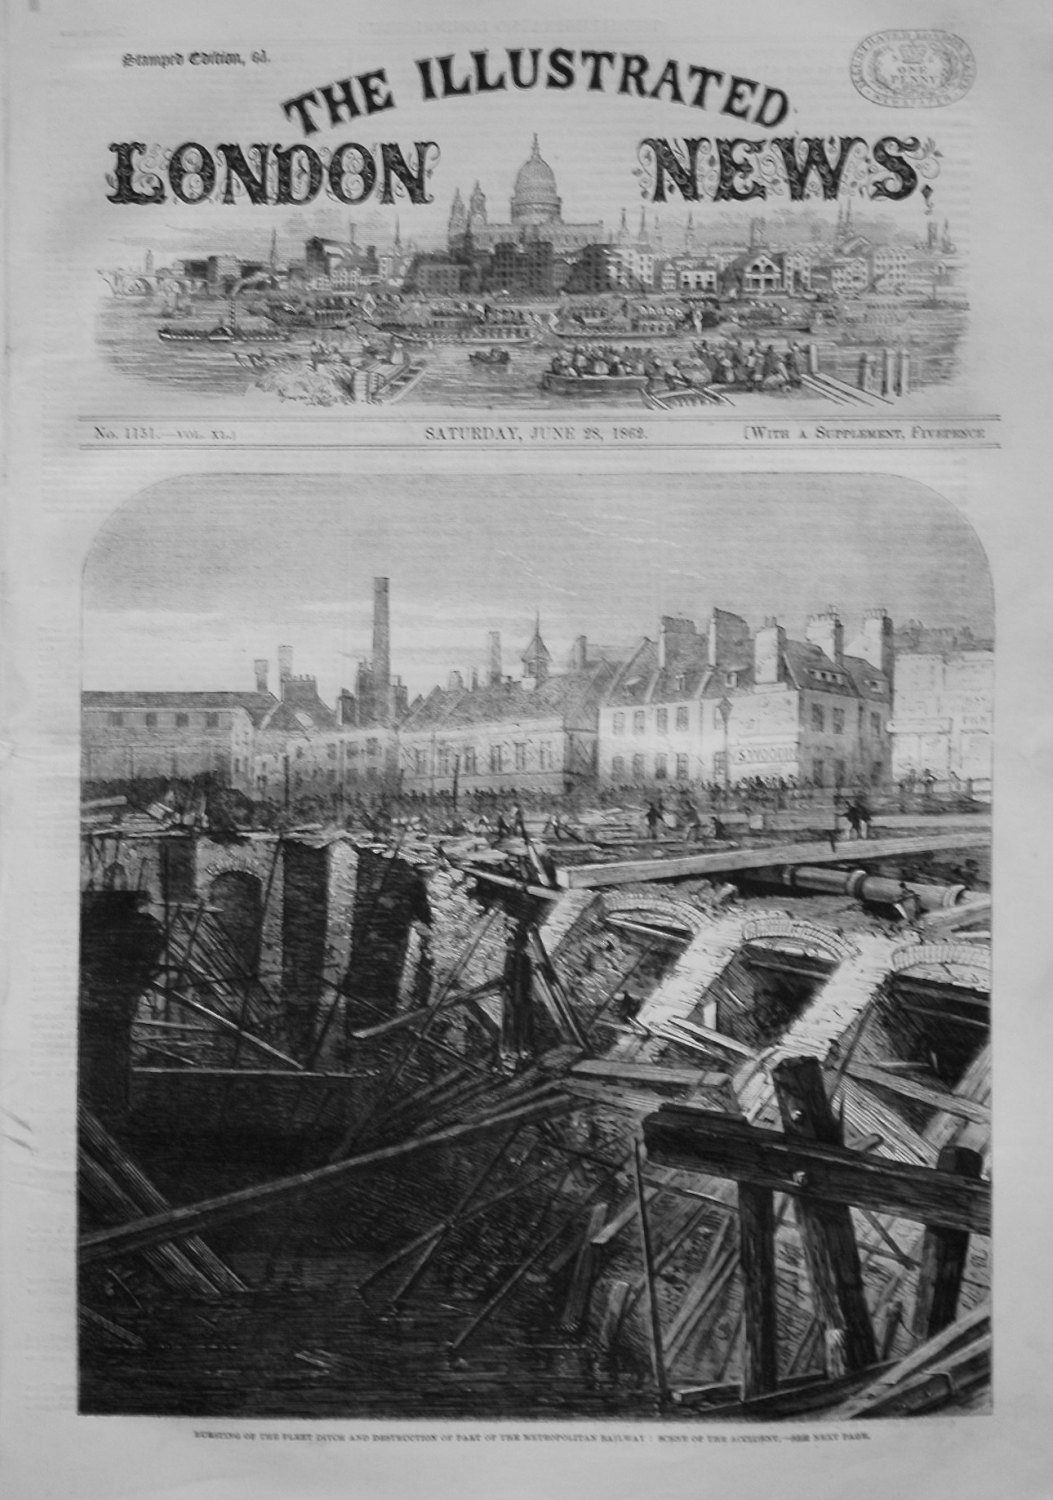 Illustrated London News, June 28th 1862.